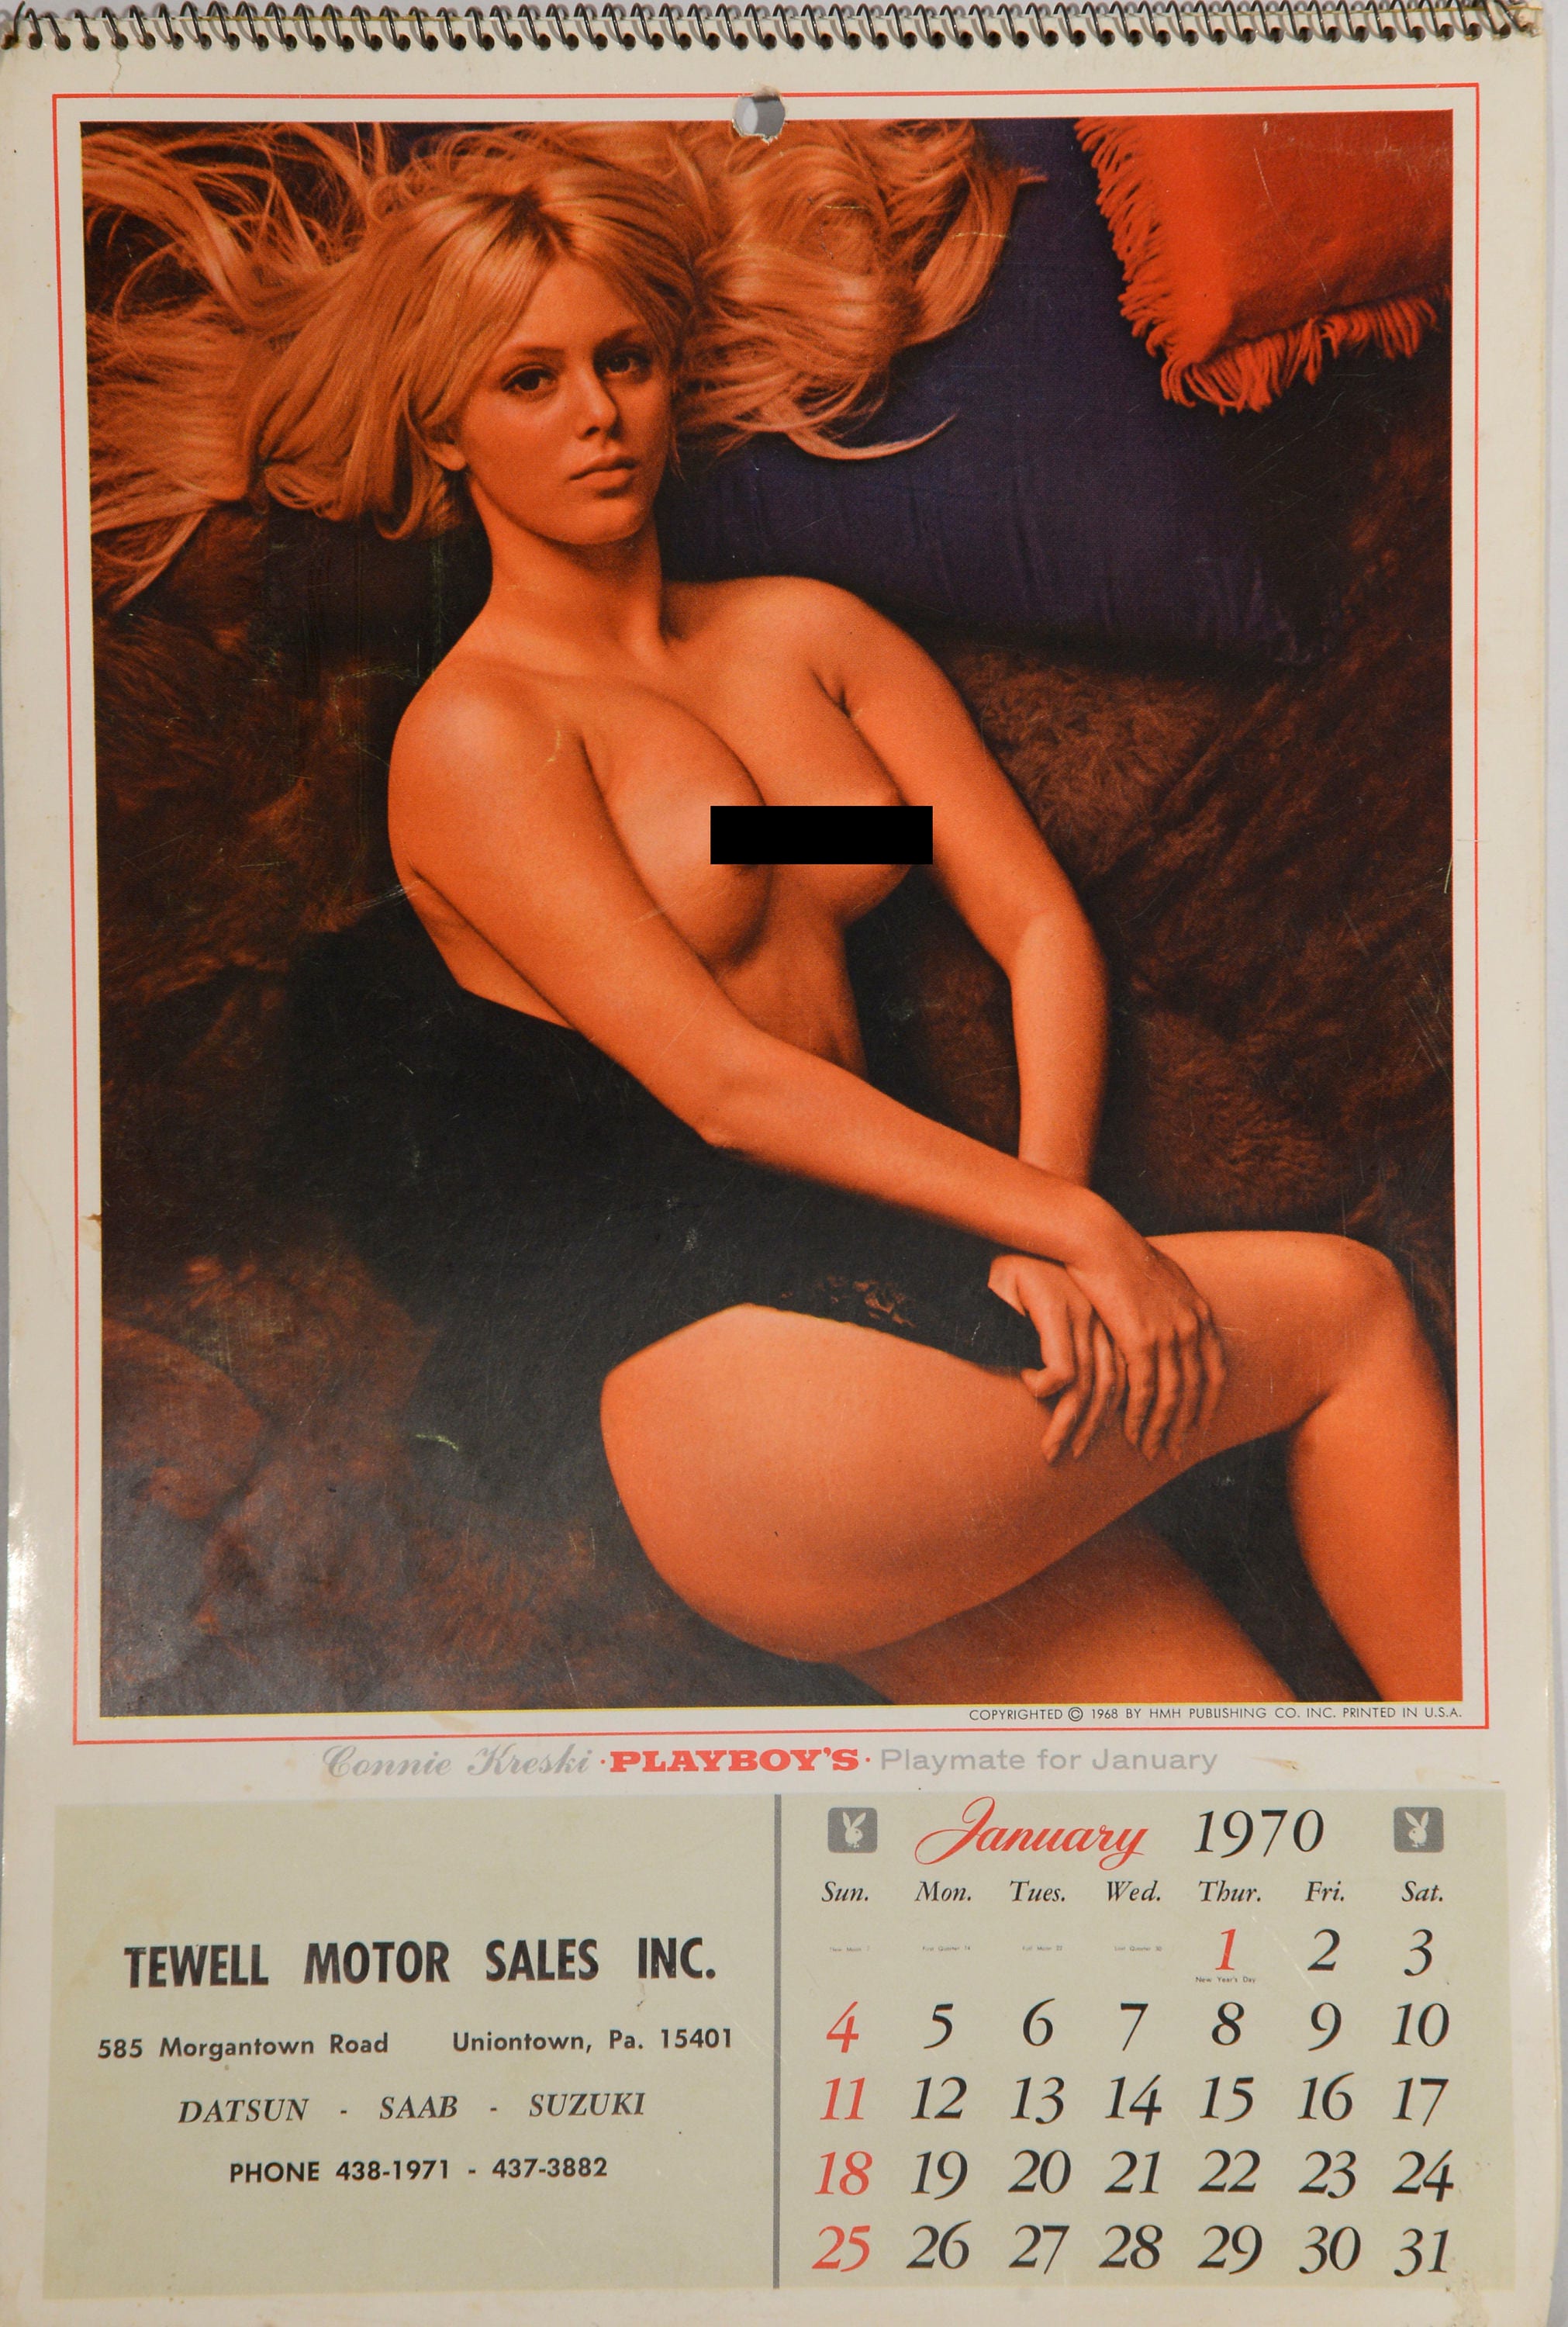 Calendrier Playboy, Playboy affiche, nudité frontale, calendrier nu, femme  nudité, Playboy Pin Up, nudité érotique, Playboy Playmates -  France